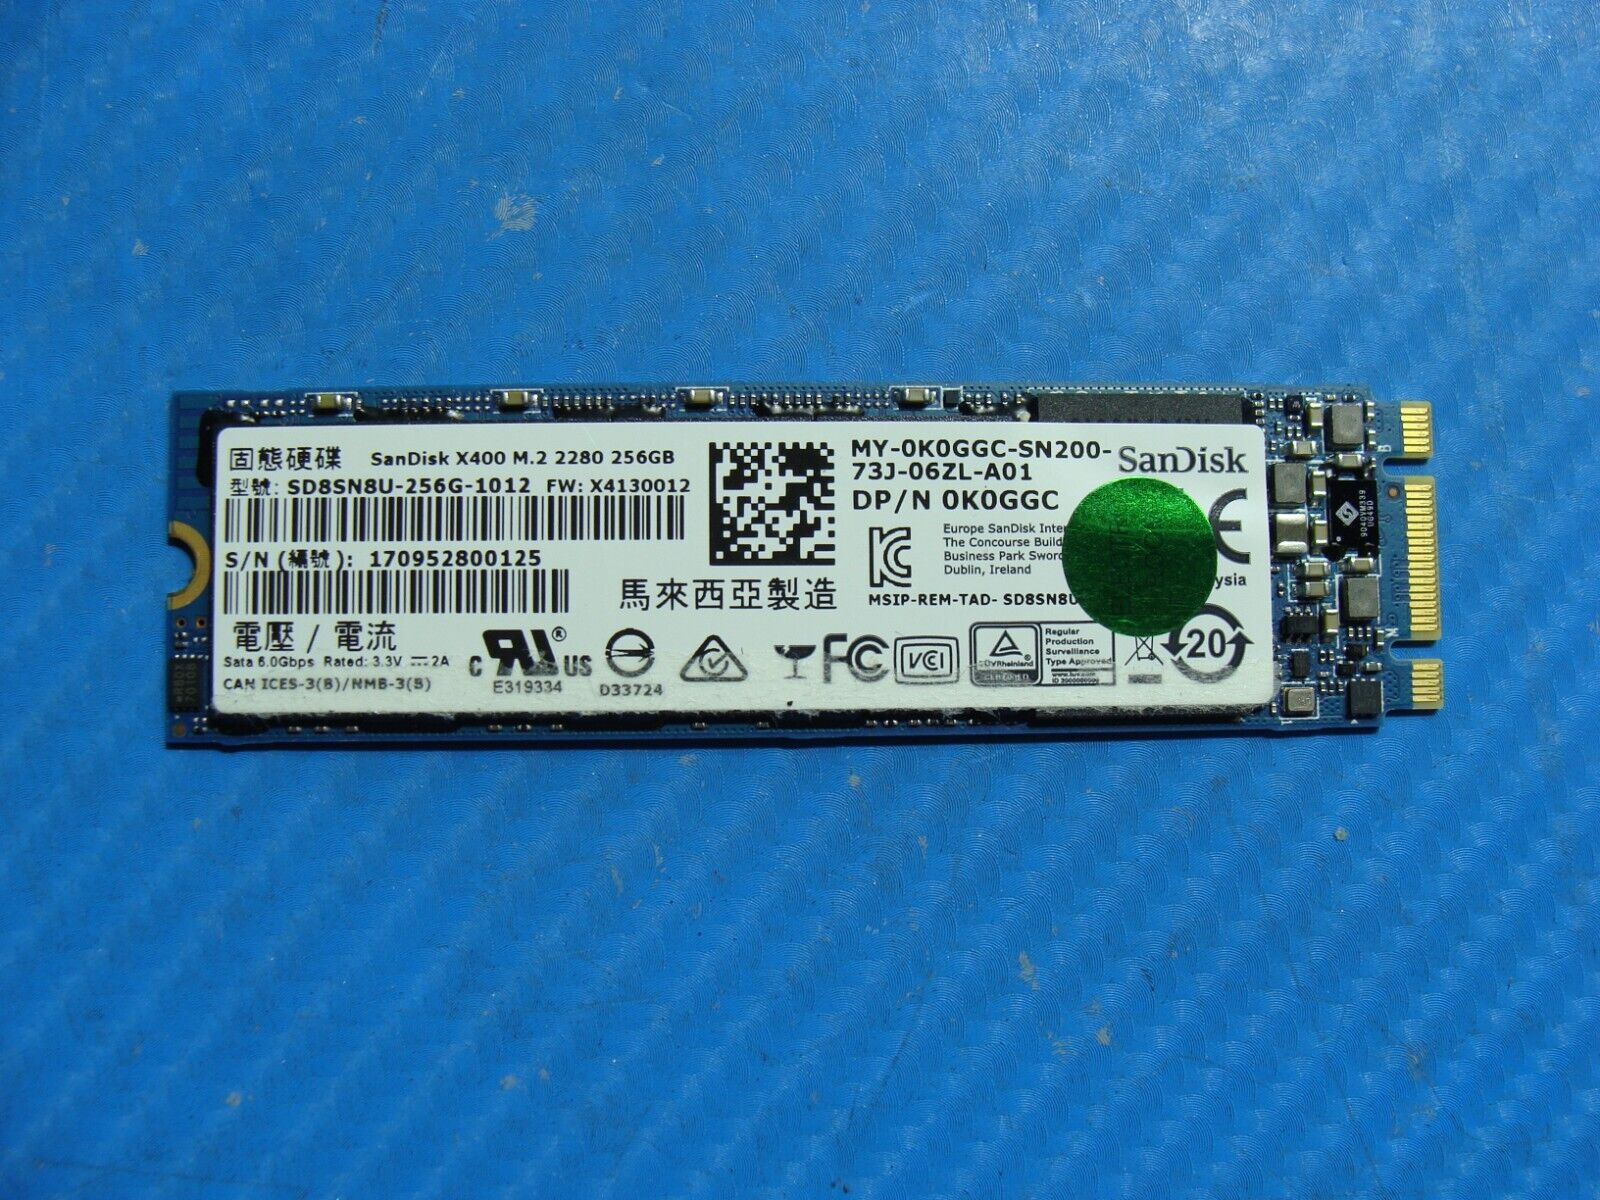 Forventer Grisling ecstasy Dell 5480 SanDisk 256GB SATA M.2 SSD Solid State Drive SD8SN8U-256G-1012  K0GGC